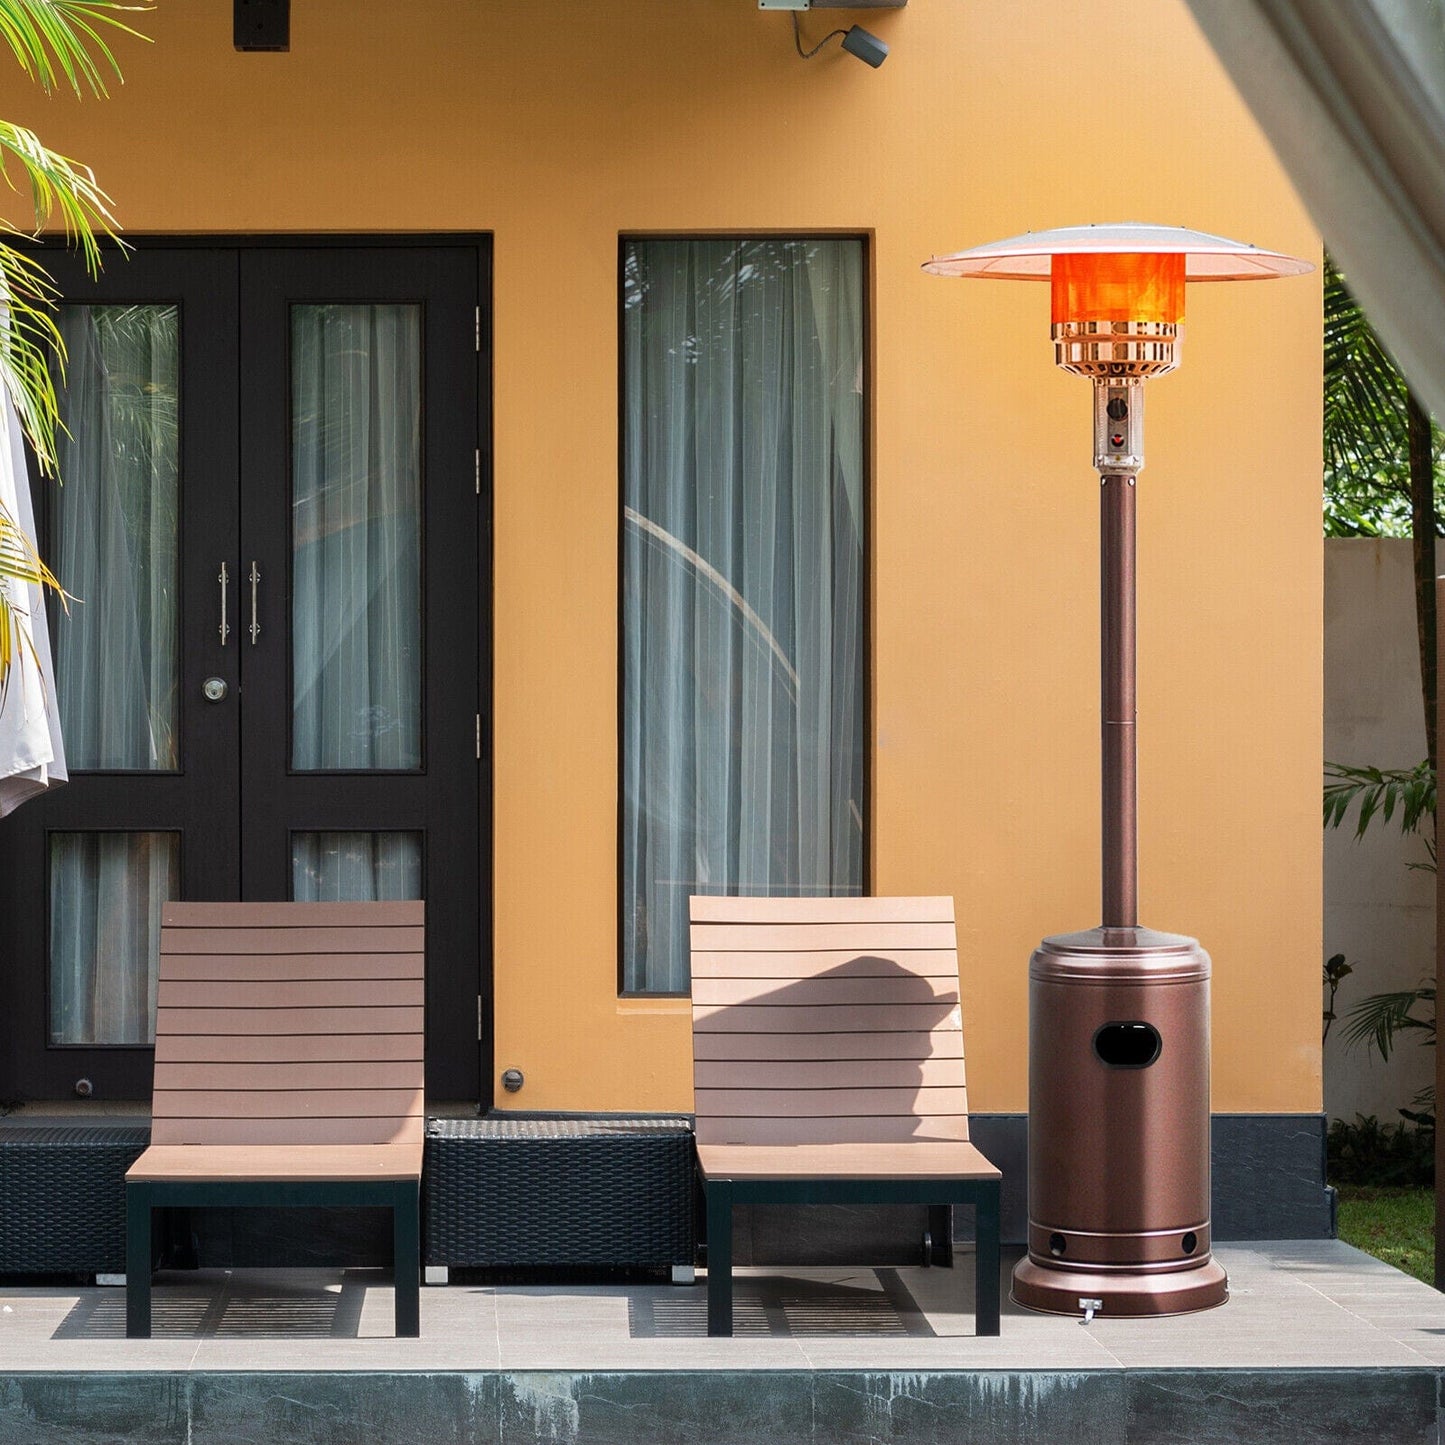 Tall Gas Propane Outdoor Deck Patio Lamp Heater 4800 BTU - Merchandise Plug